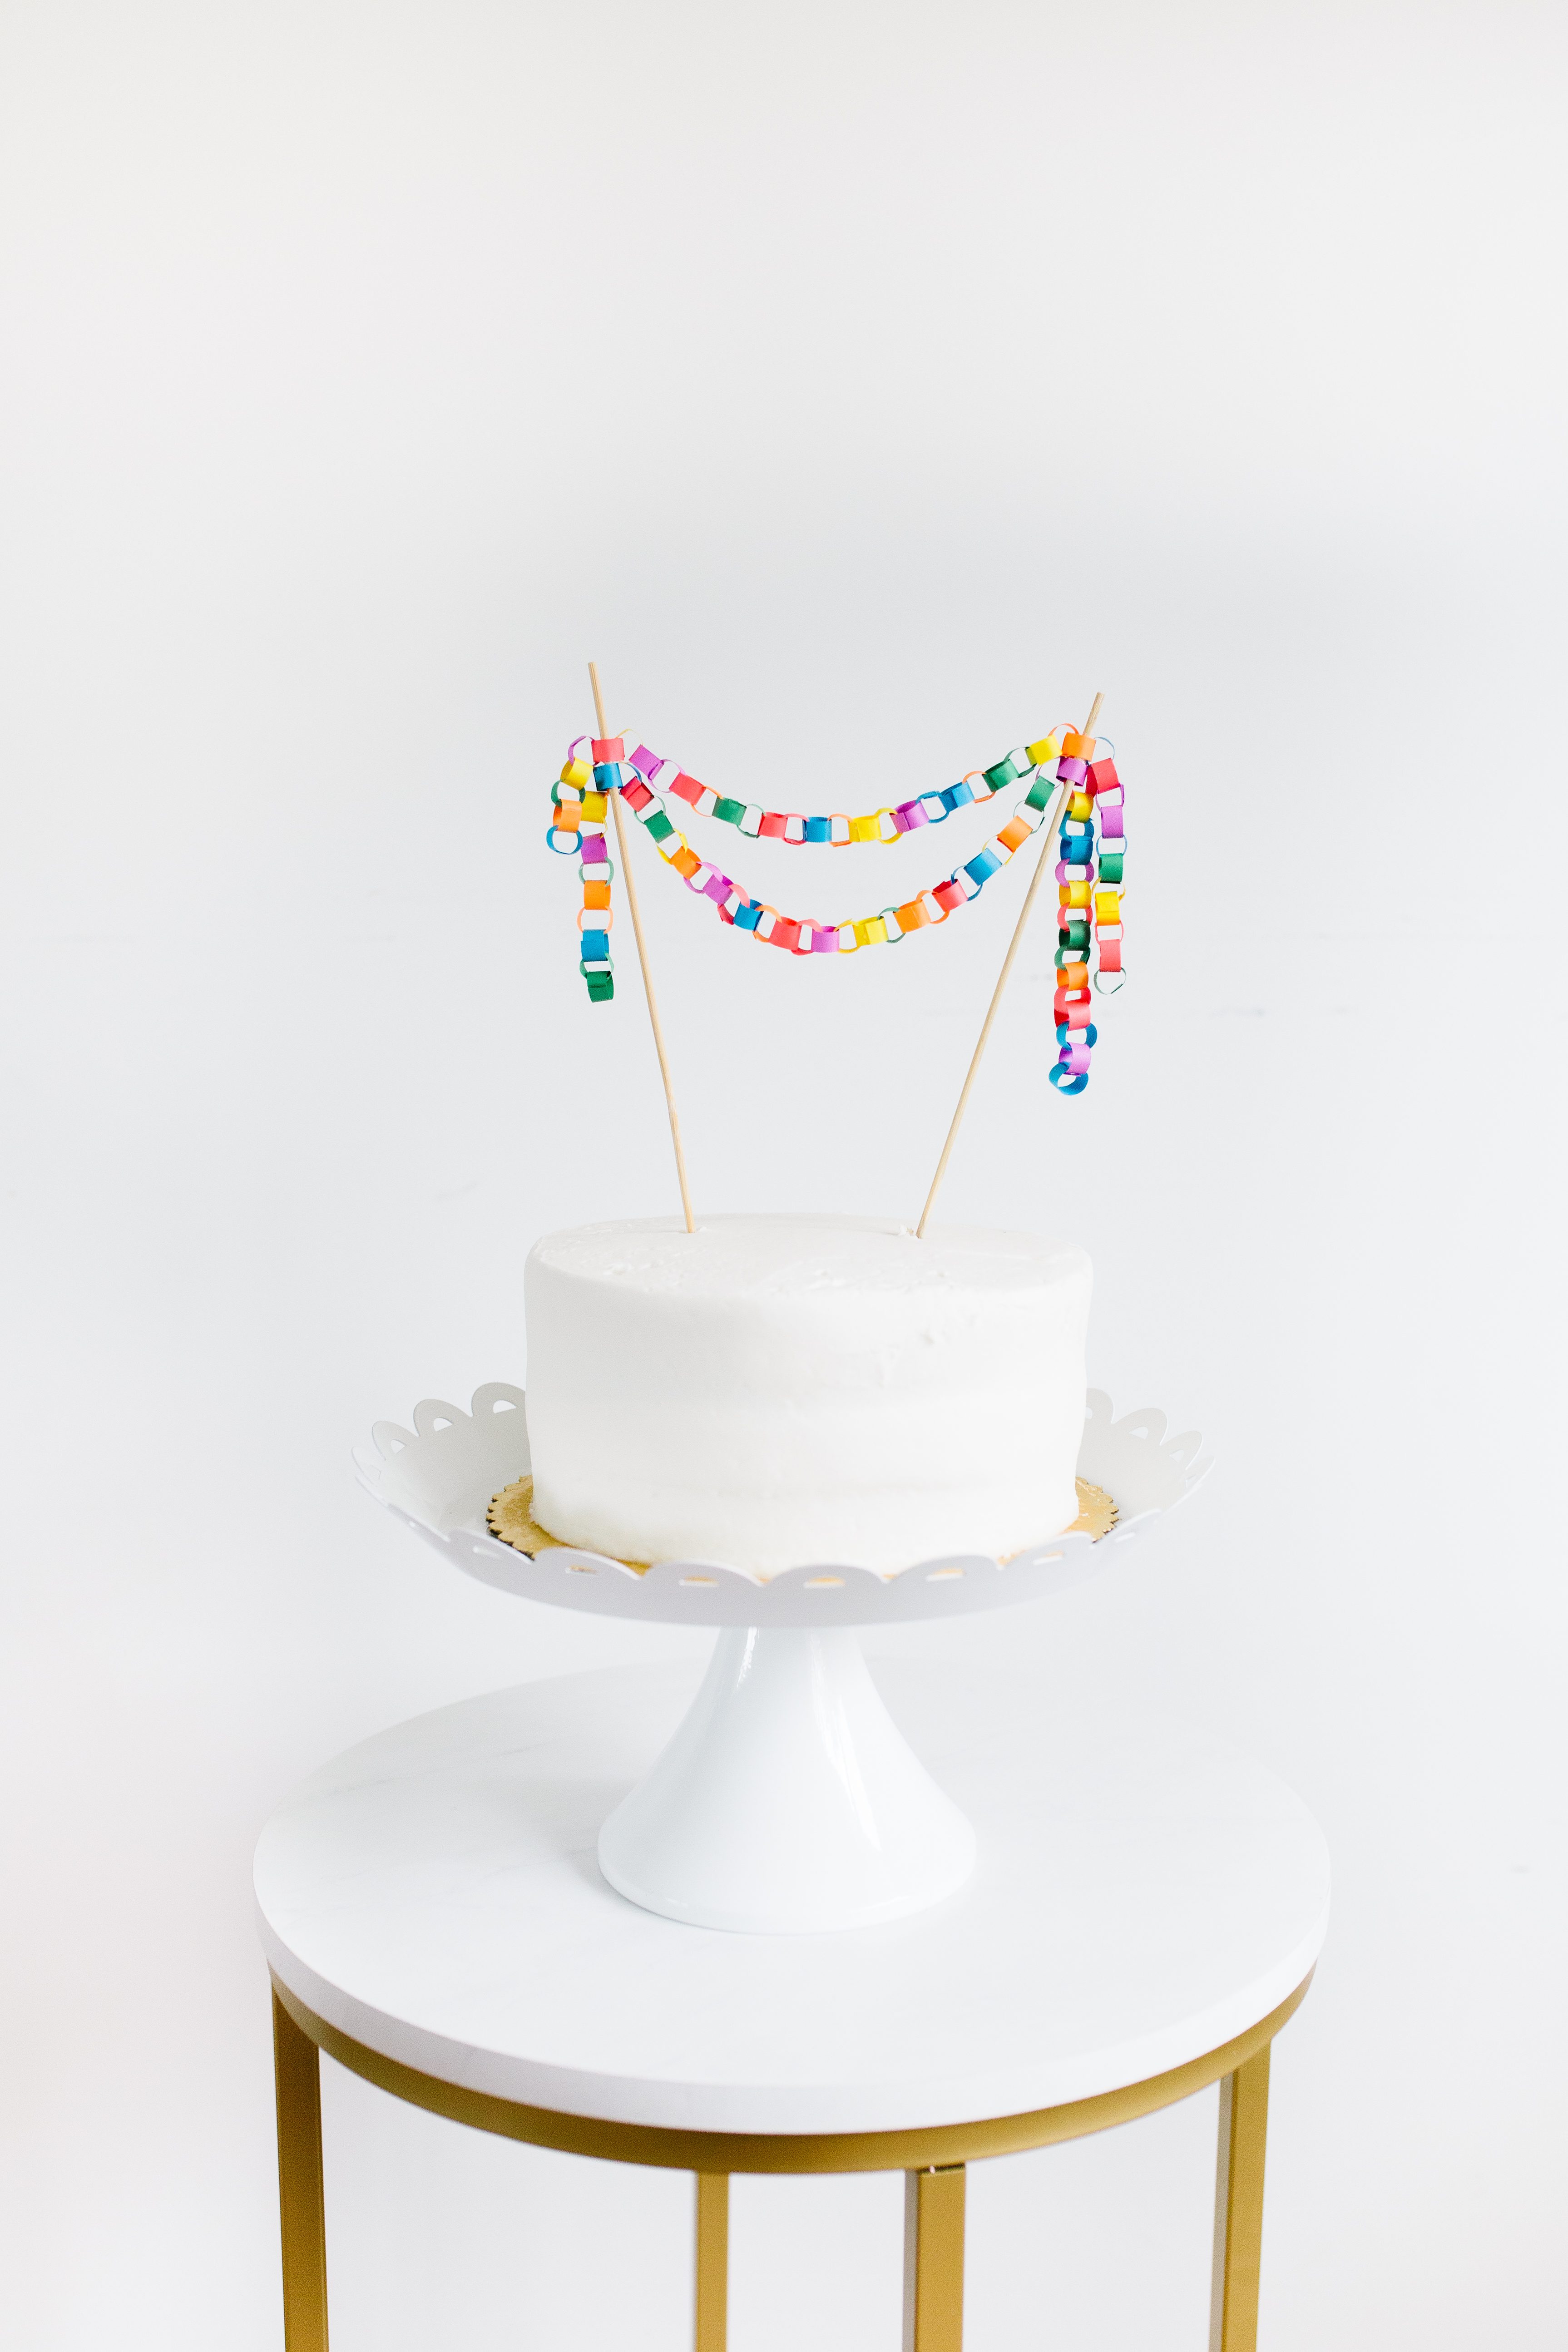 Welcome to Paper.Scissors.Cake Art Studio! - Paper.Scissors.Cake.